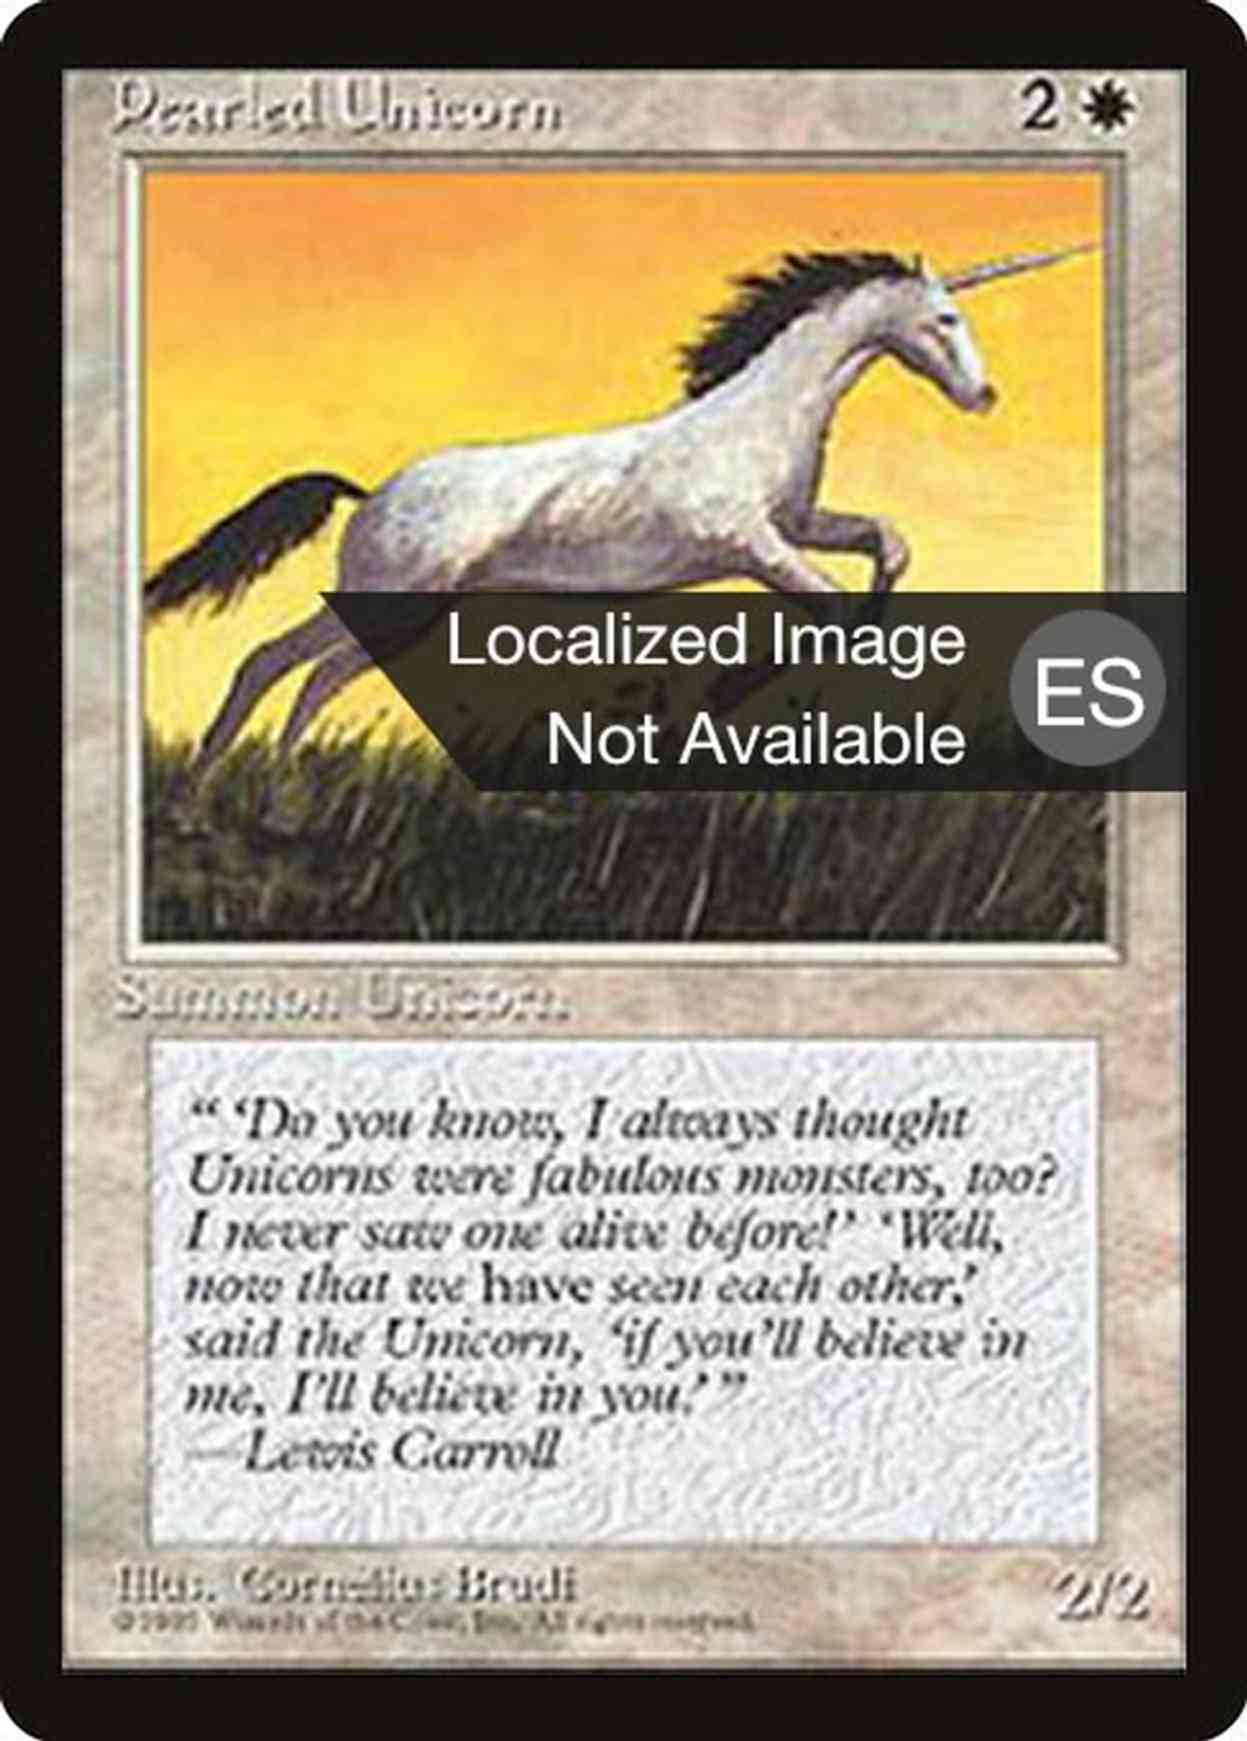 Pearled Unicorn magic card front